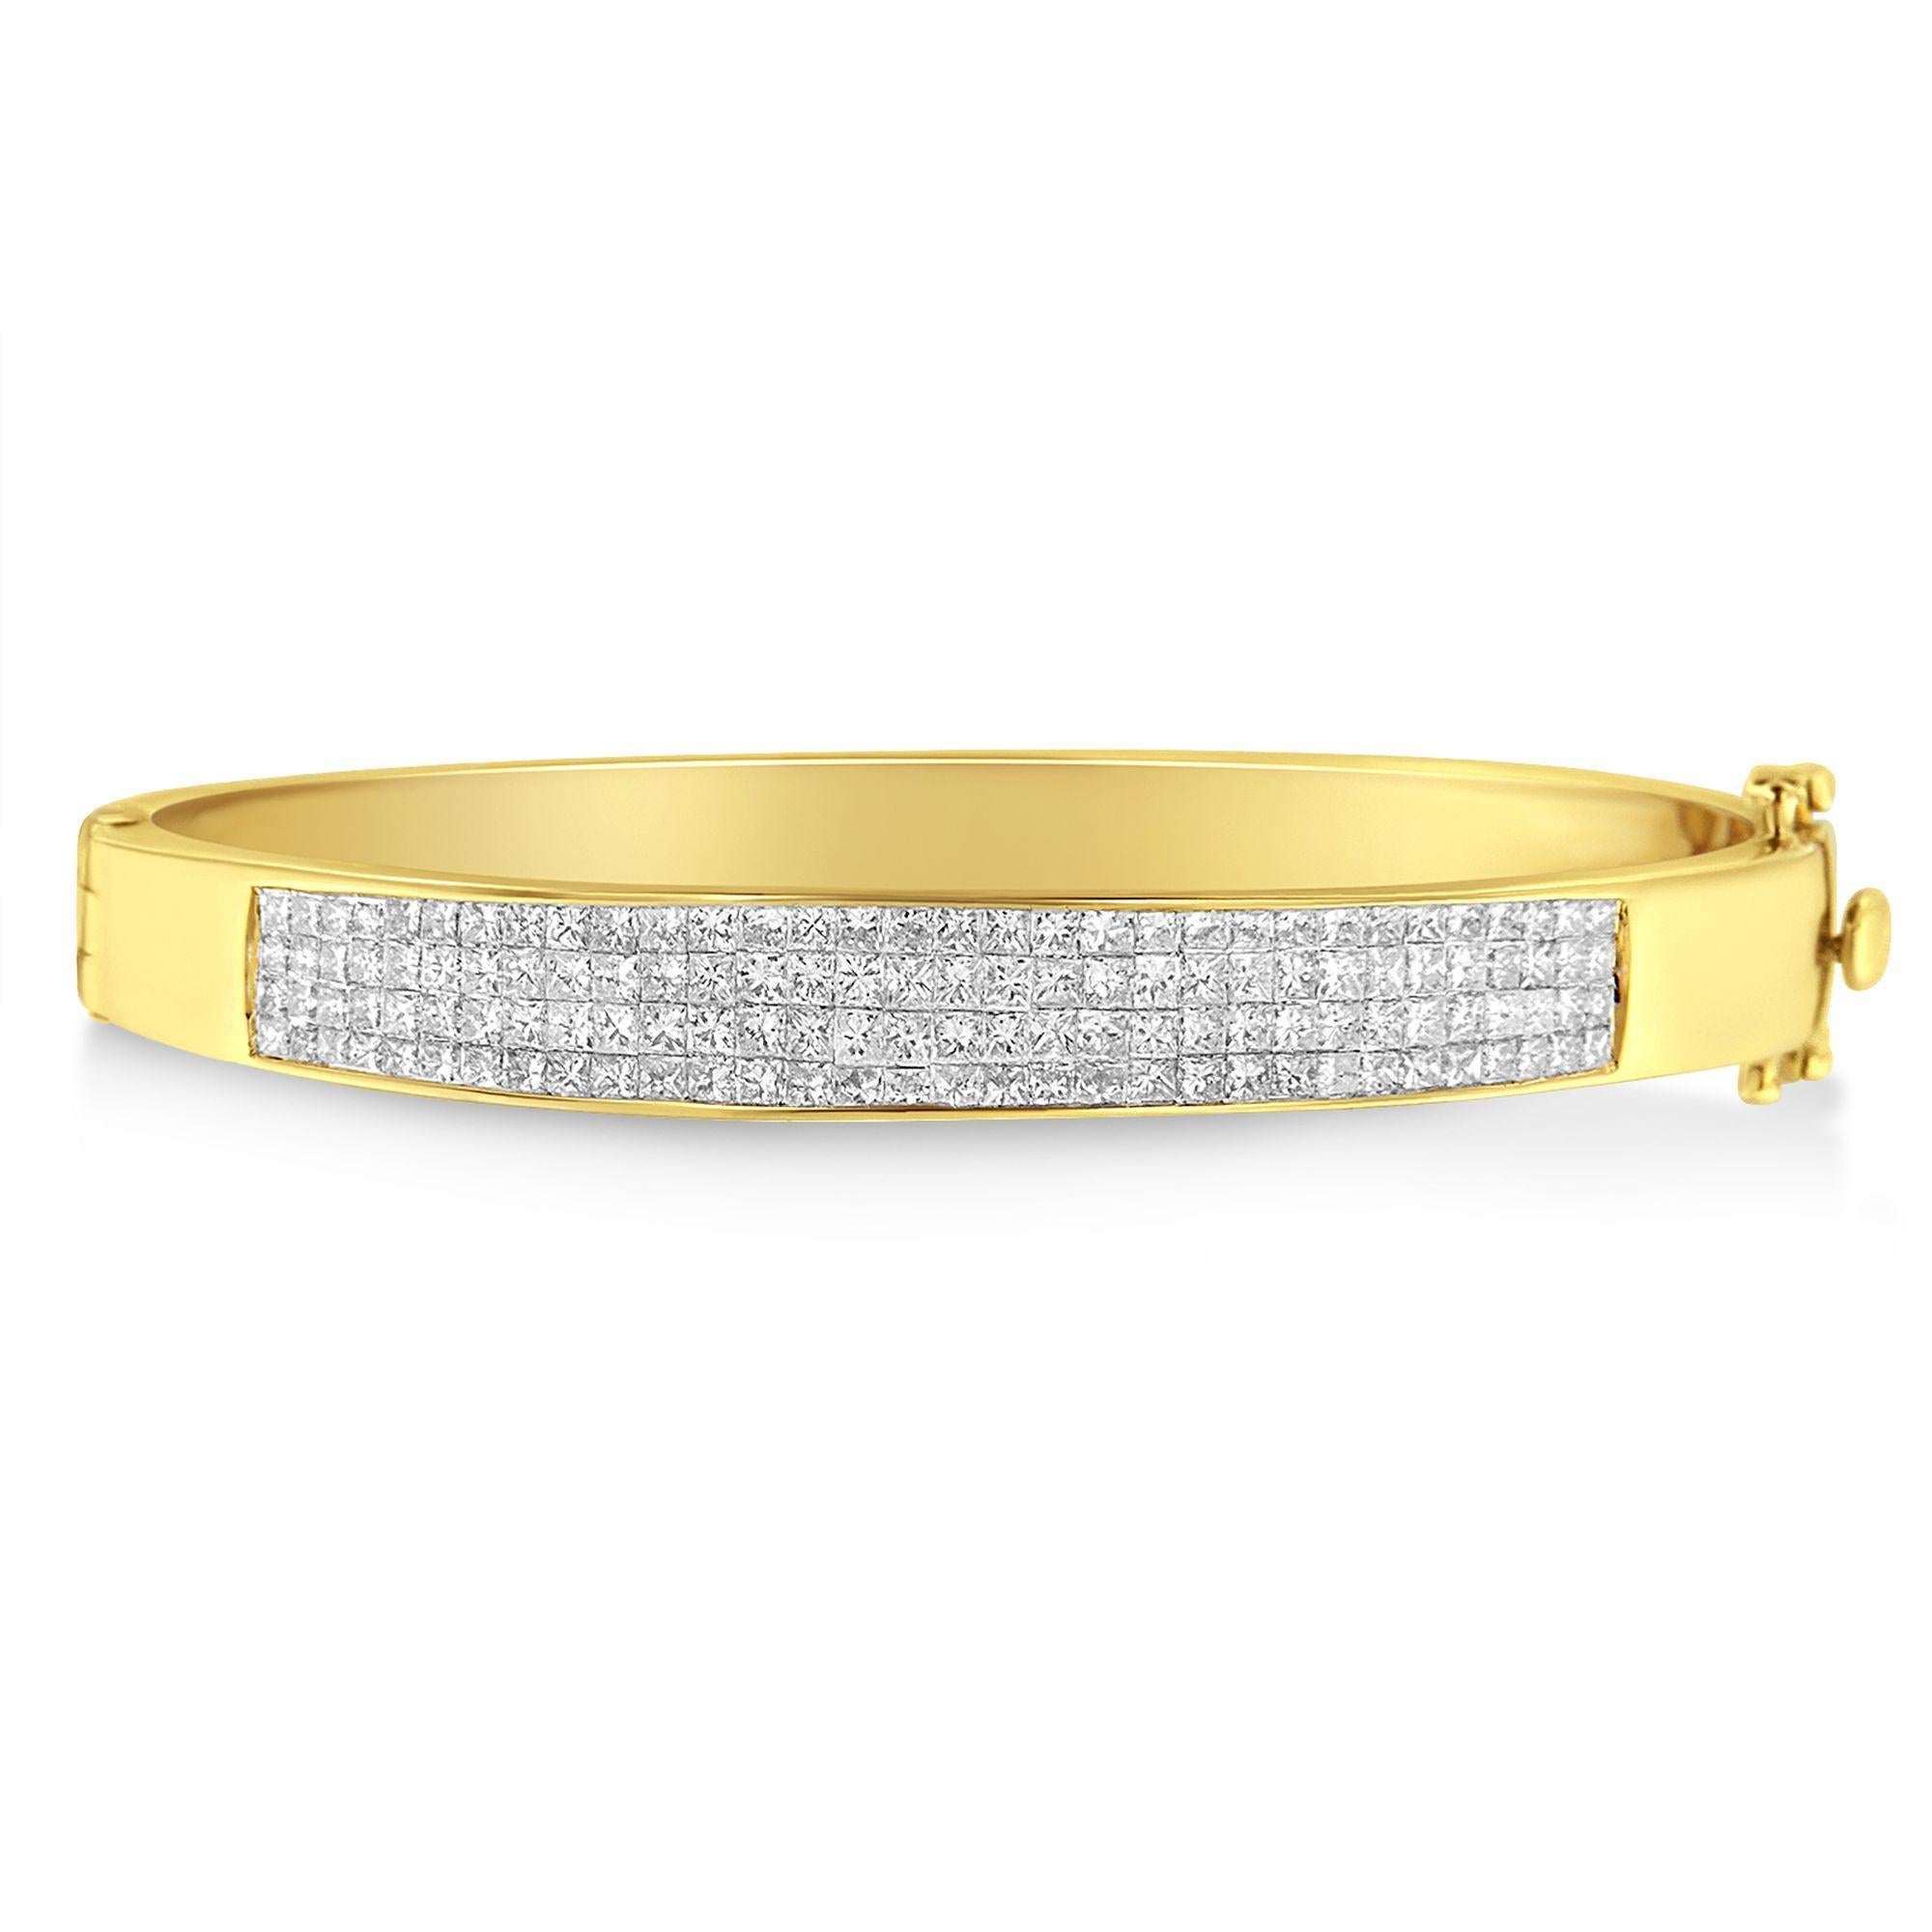 Contemporary 14K Yellow Gold 4.00 Carat Invisible-Set Princess Cut Diamond ID Bangle Bracelet